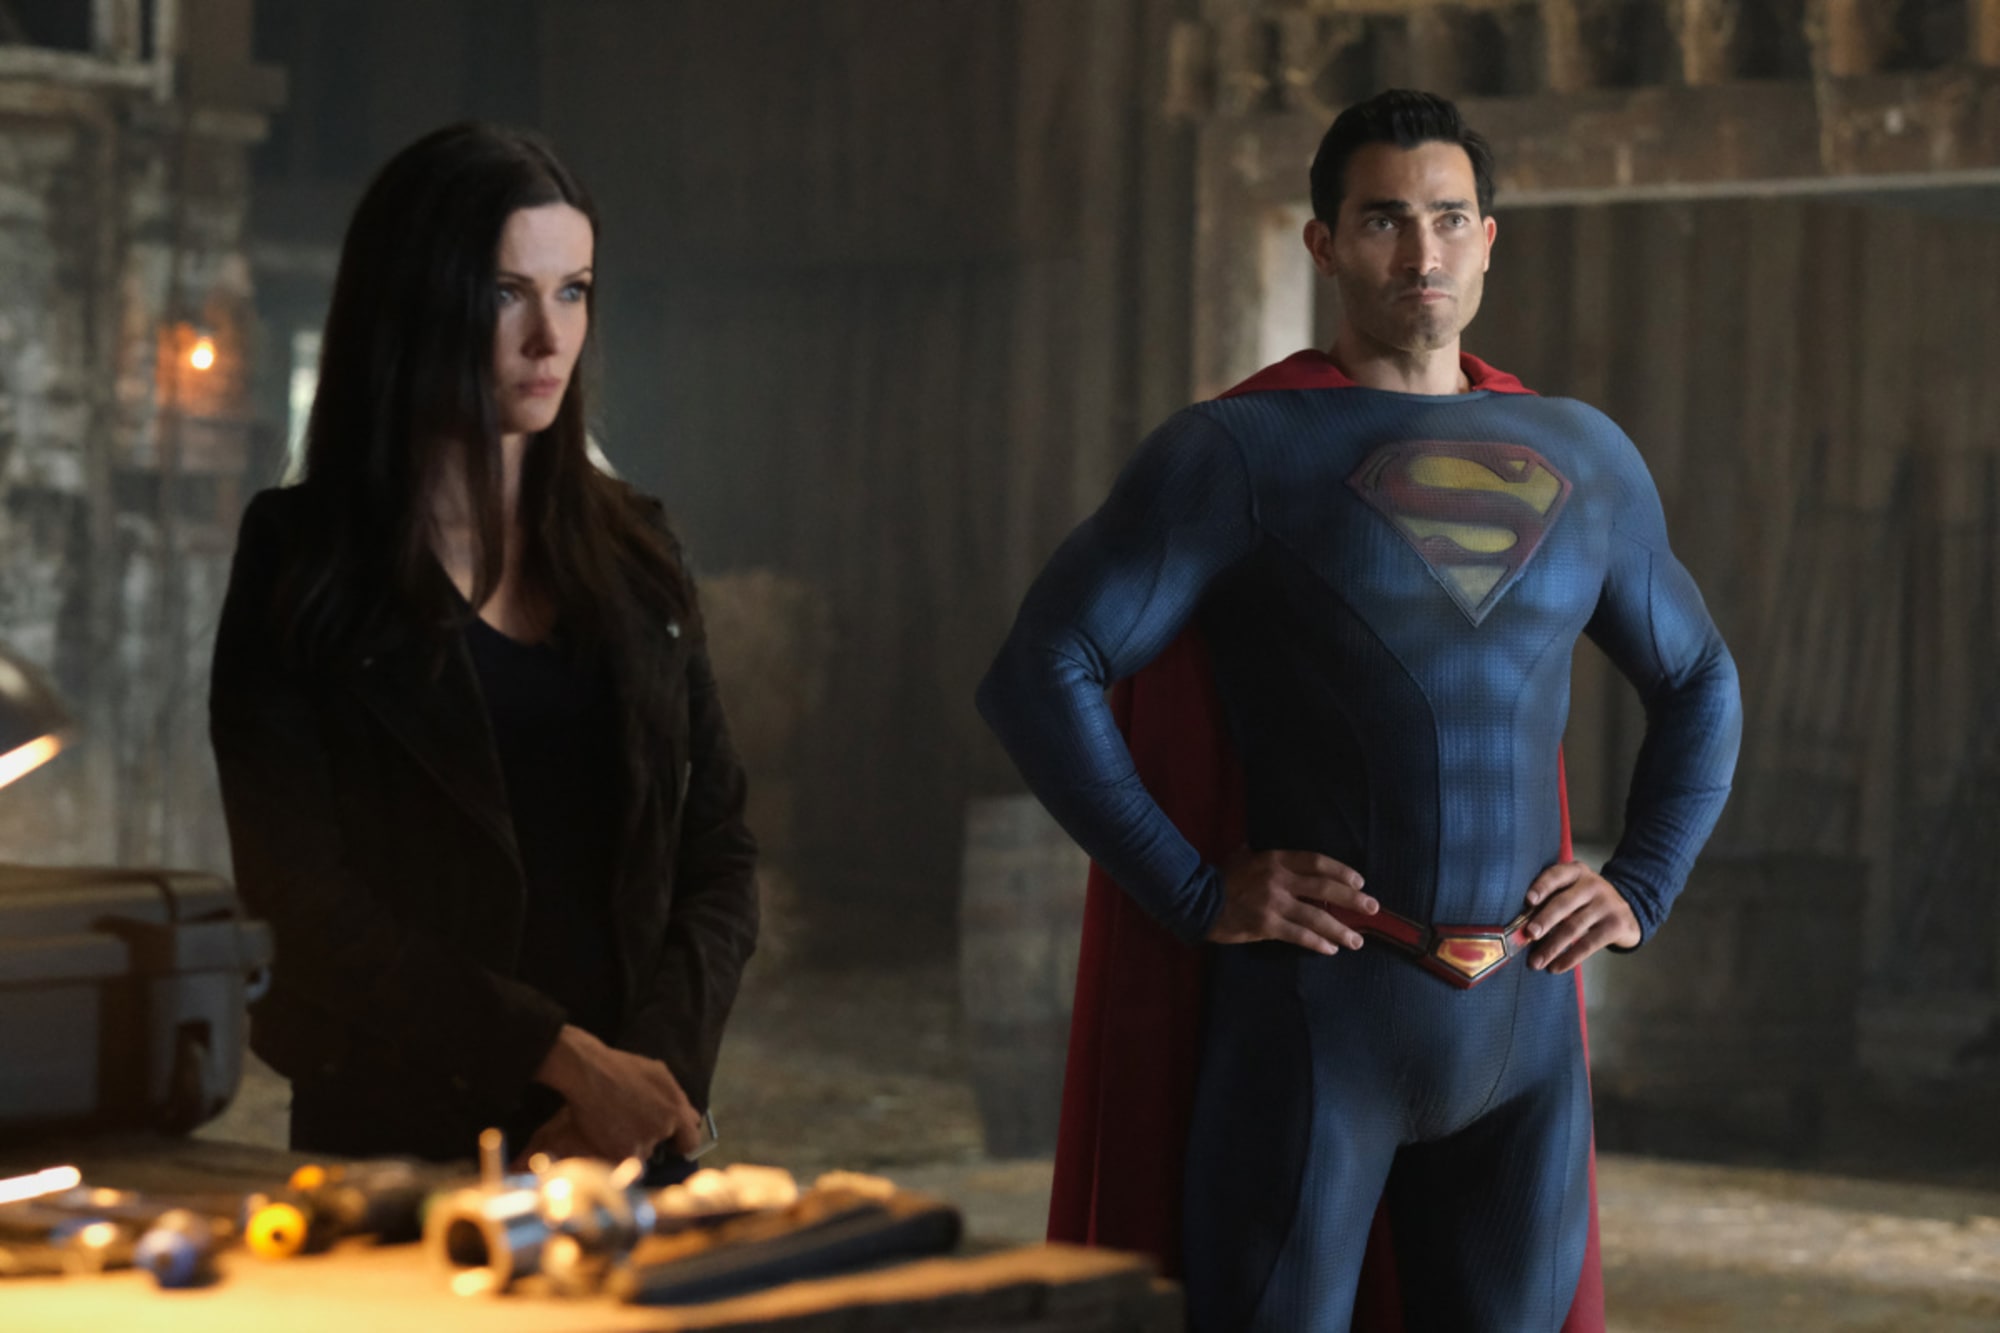 War threatens Smallville in trailer for Superman & Lois season 1 finale